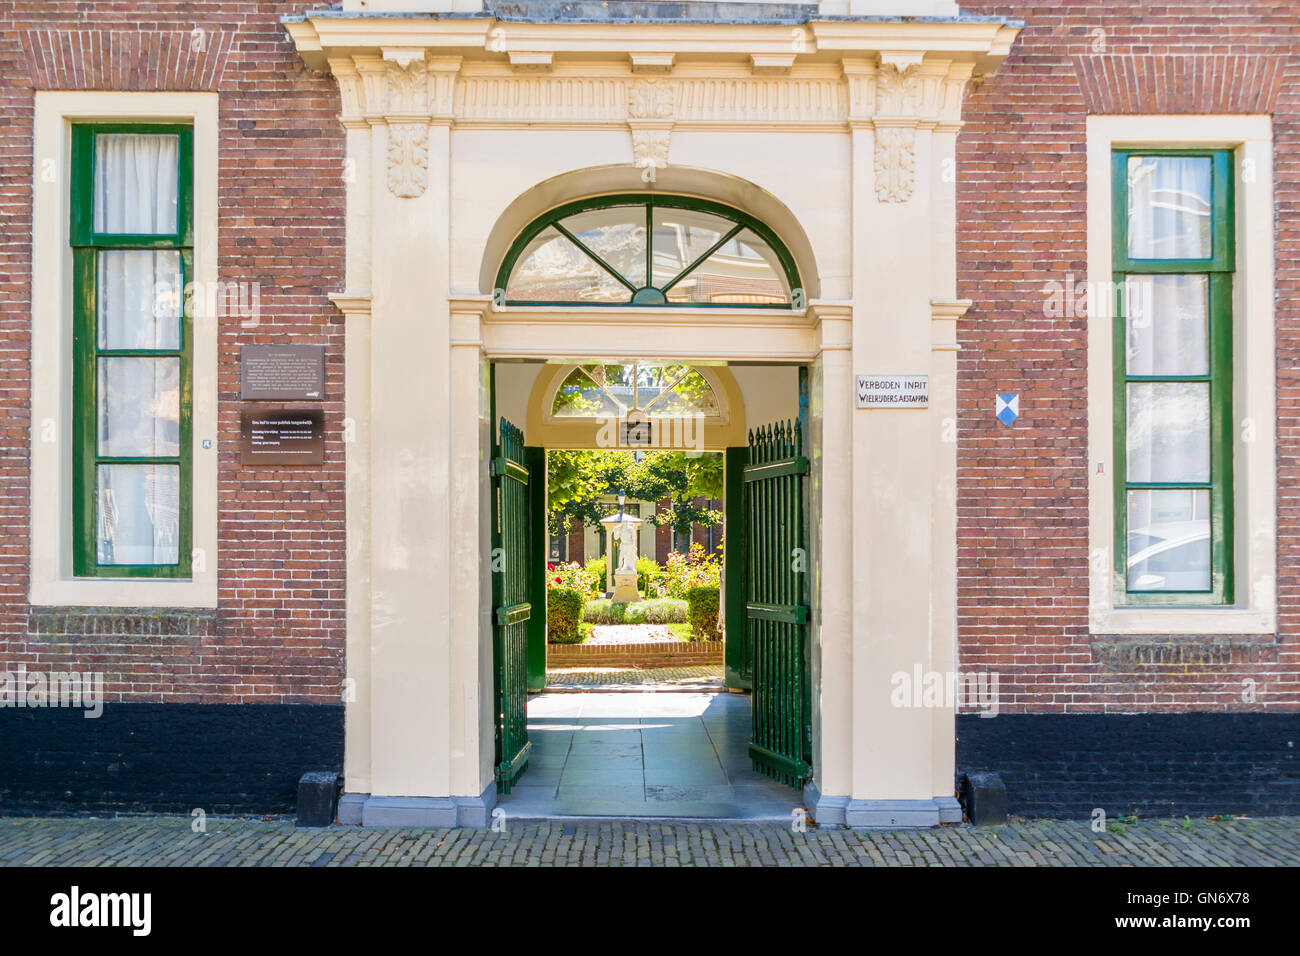 Entrance gate of courtyard Wildemanshofje in Alkmaar, North Holland, Netherlands Stock Photo